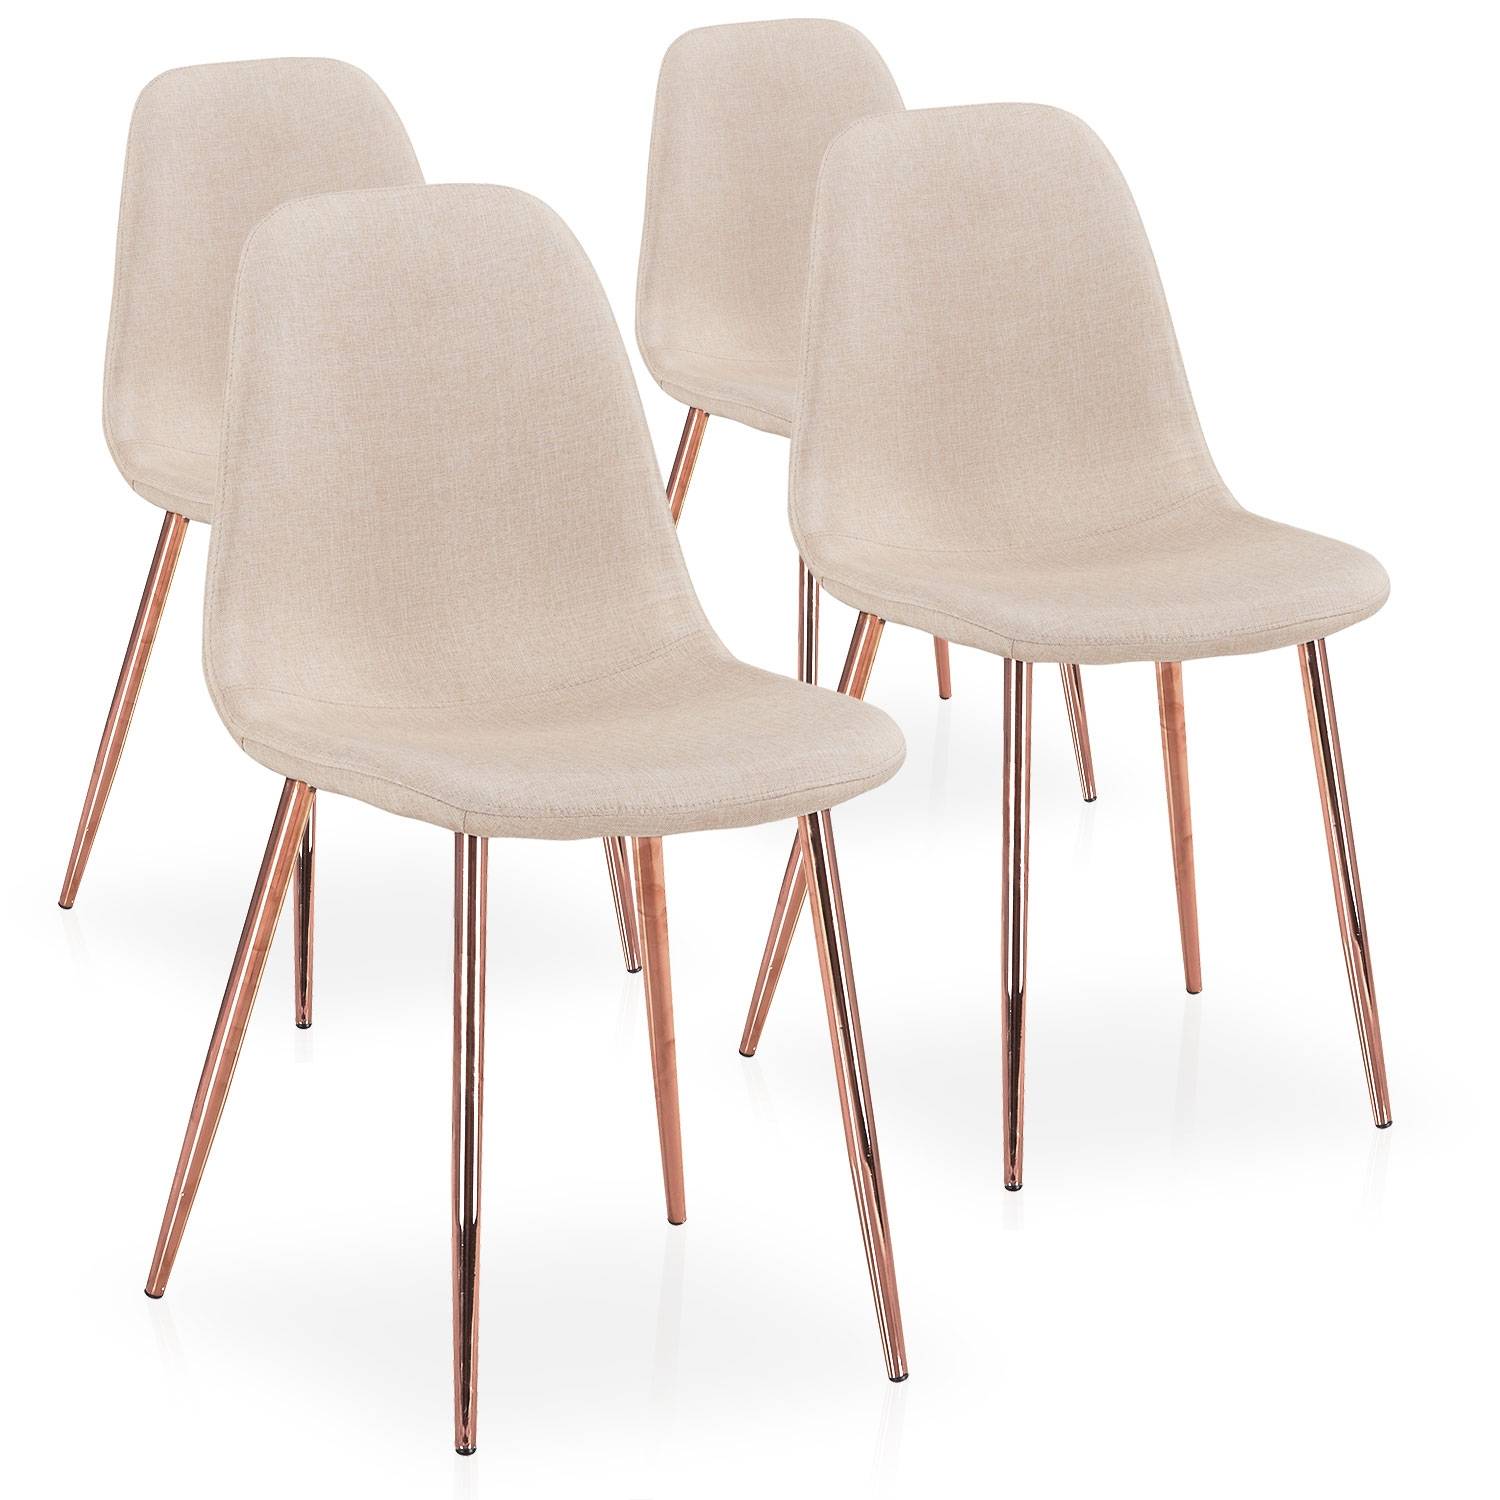 Set di 6 sedie scandinave imbottite, con gambe in legno per sala da